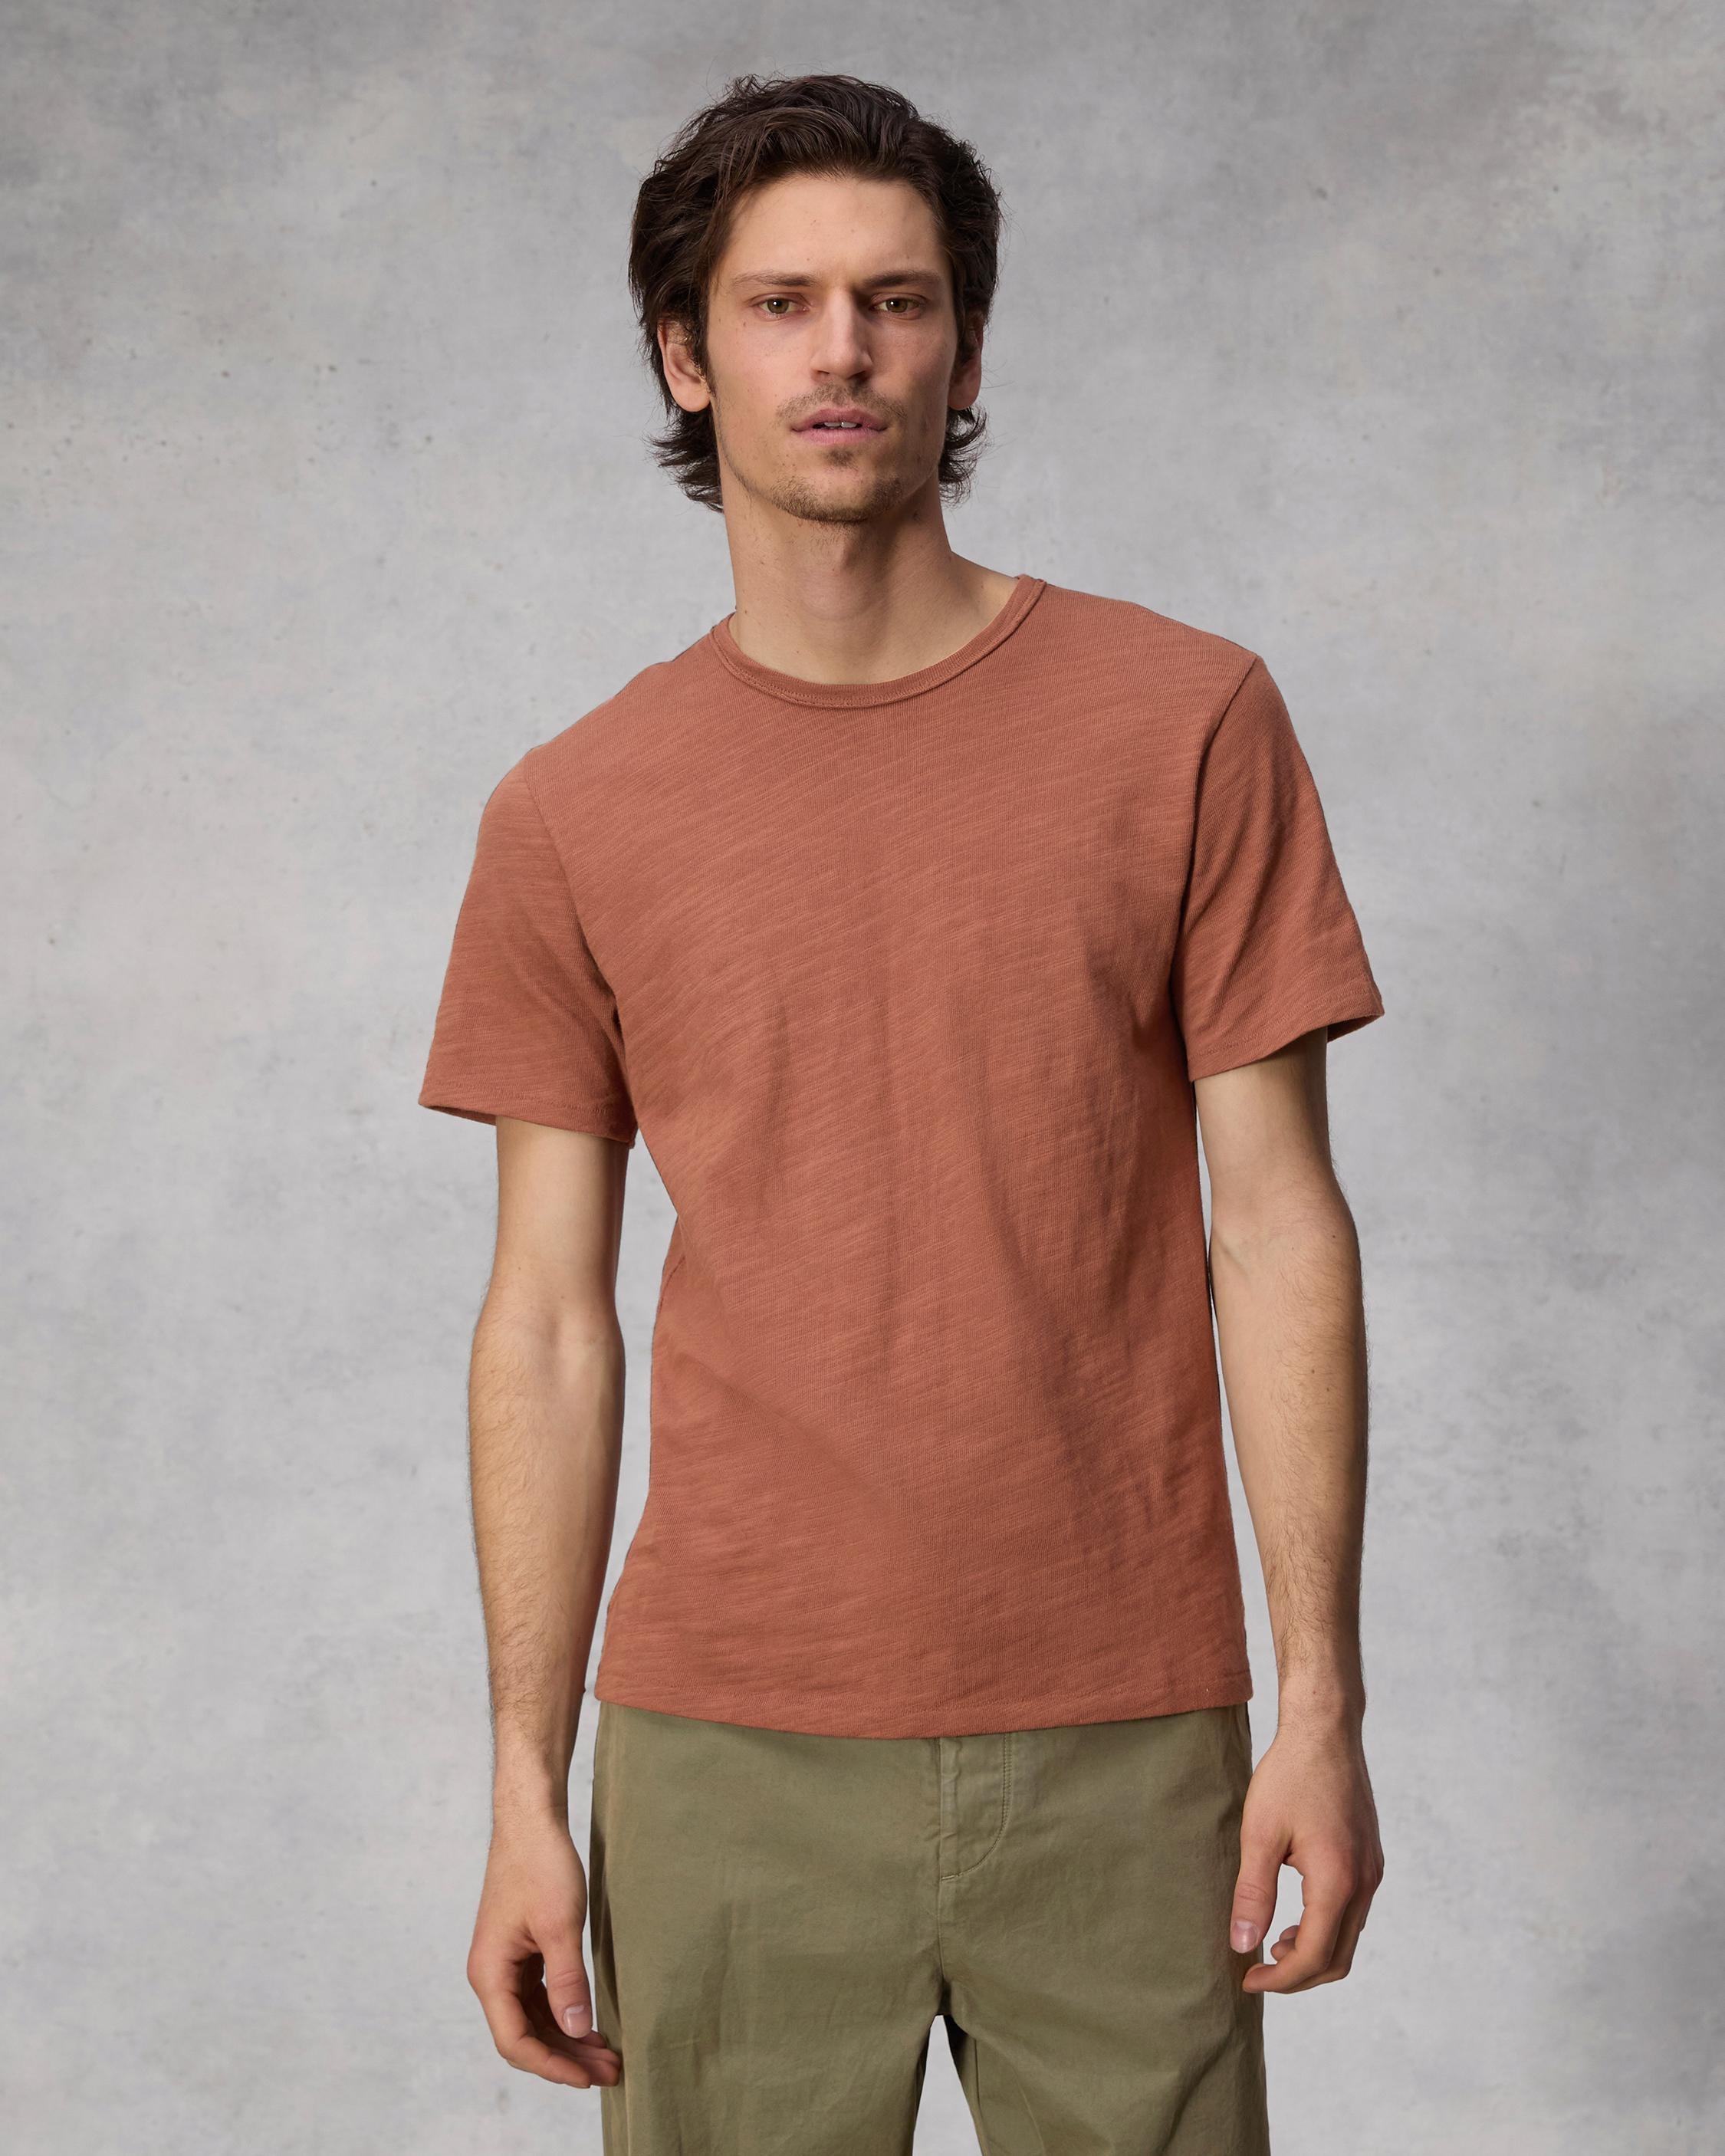 Classic Flame Tee
Organic Cotton T-Shirt - 2